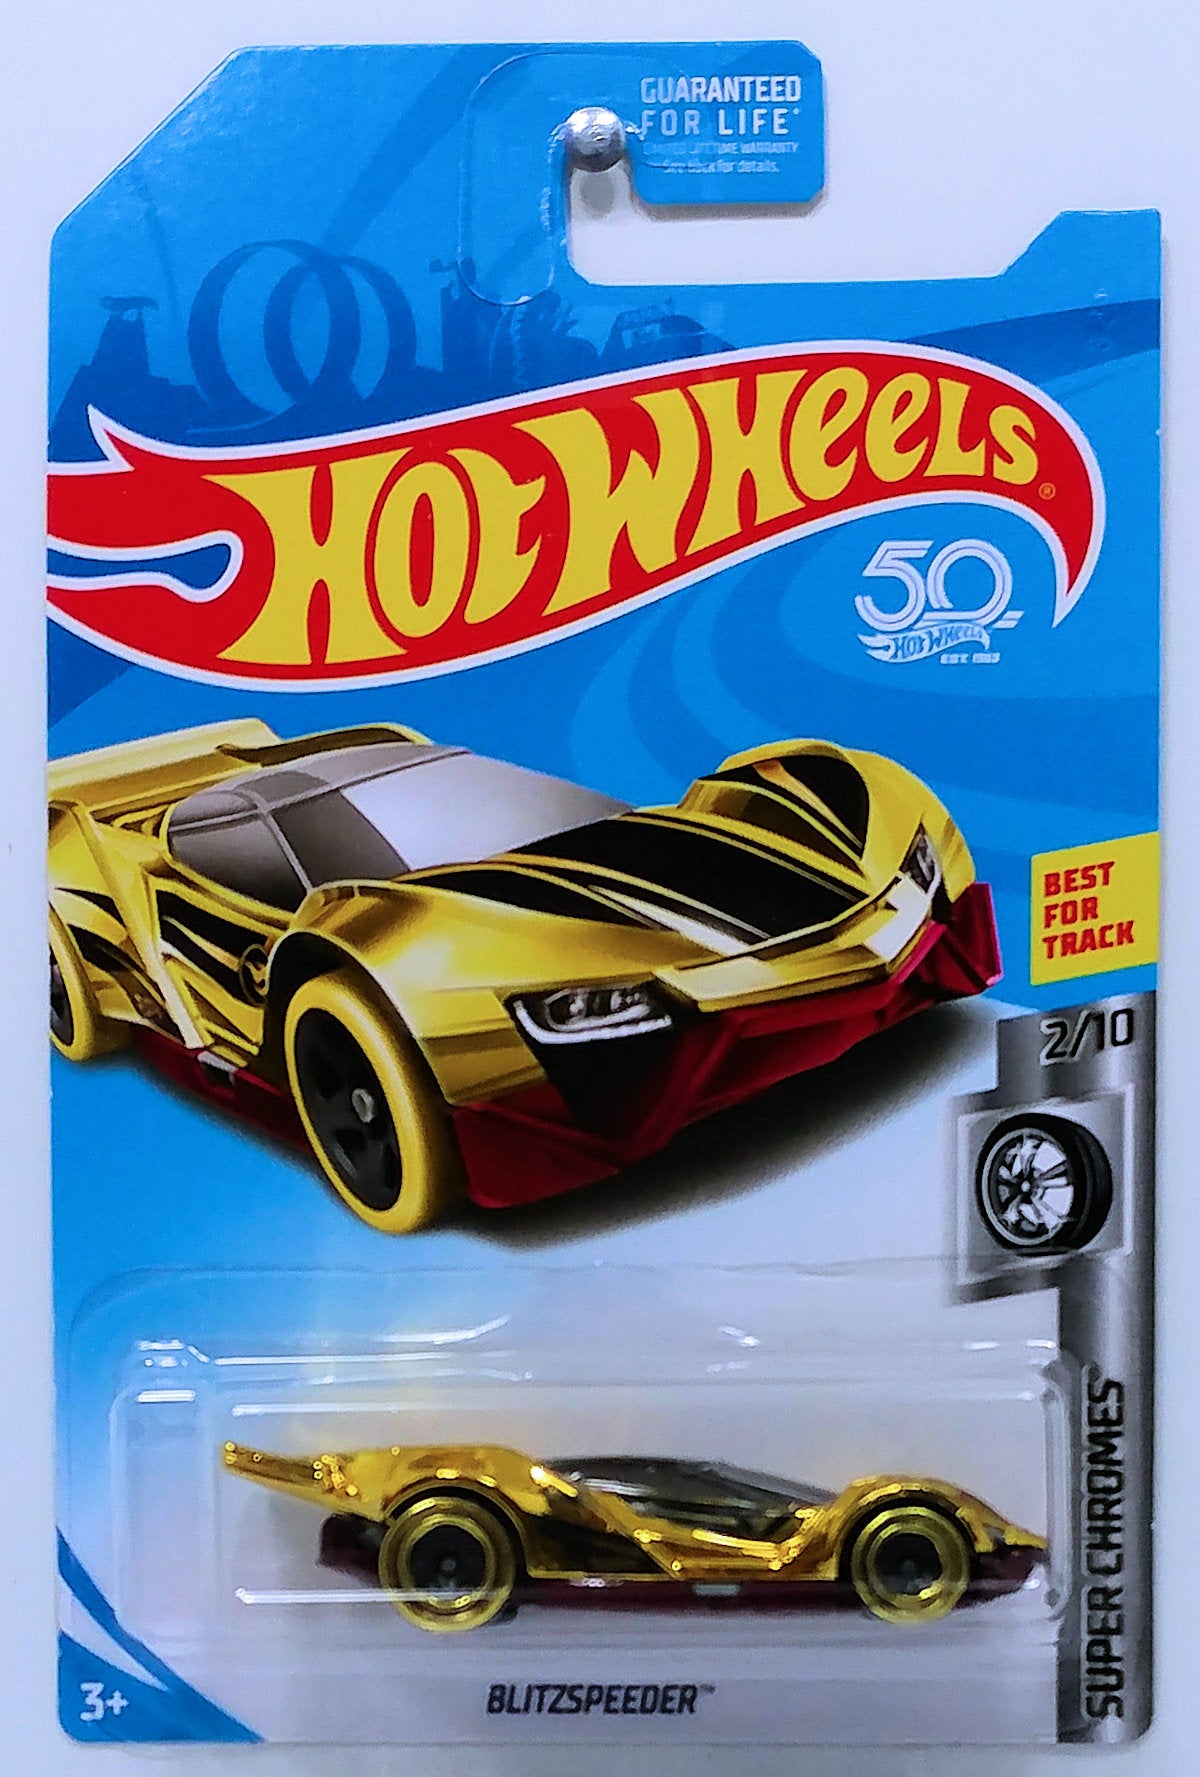 Hot Wheels 2018 - Collector # XXX/365 - Super Chromes 2/10 - Treasure Hunts - Blitzspeeder - Gold Chrome / Small Circle Flame Logo on Sides - USA 50th Card